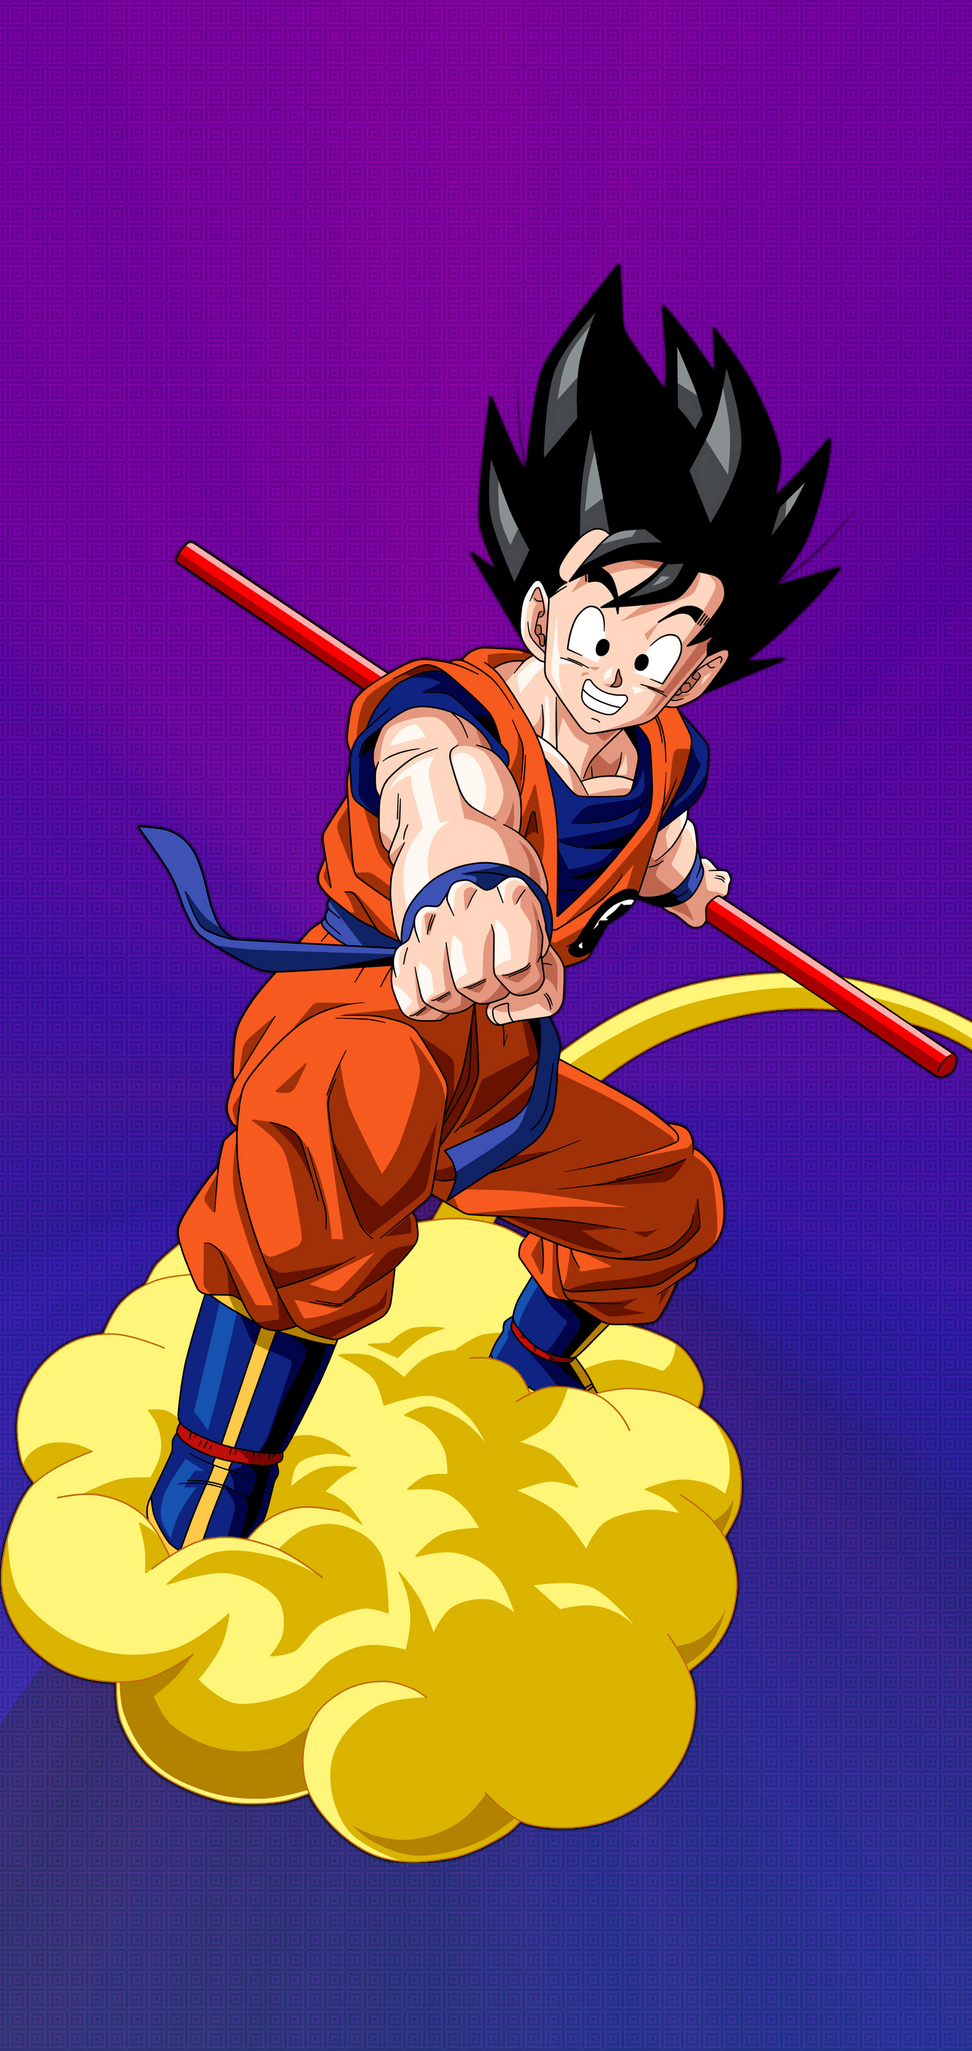 Wallpaper Dragon Ball, Anime, de Perfil de Goku Sad, Goku, Vegeta,  Background - Download Free Image